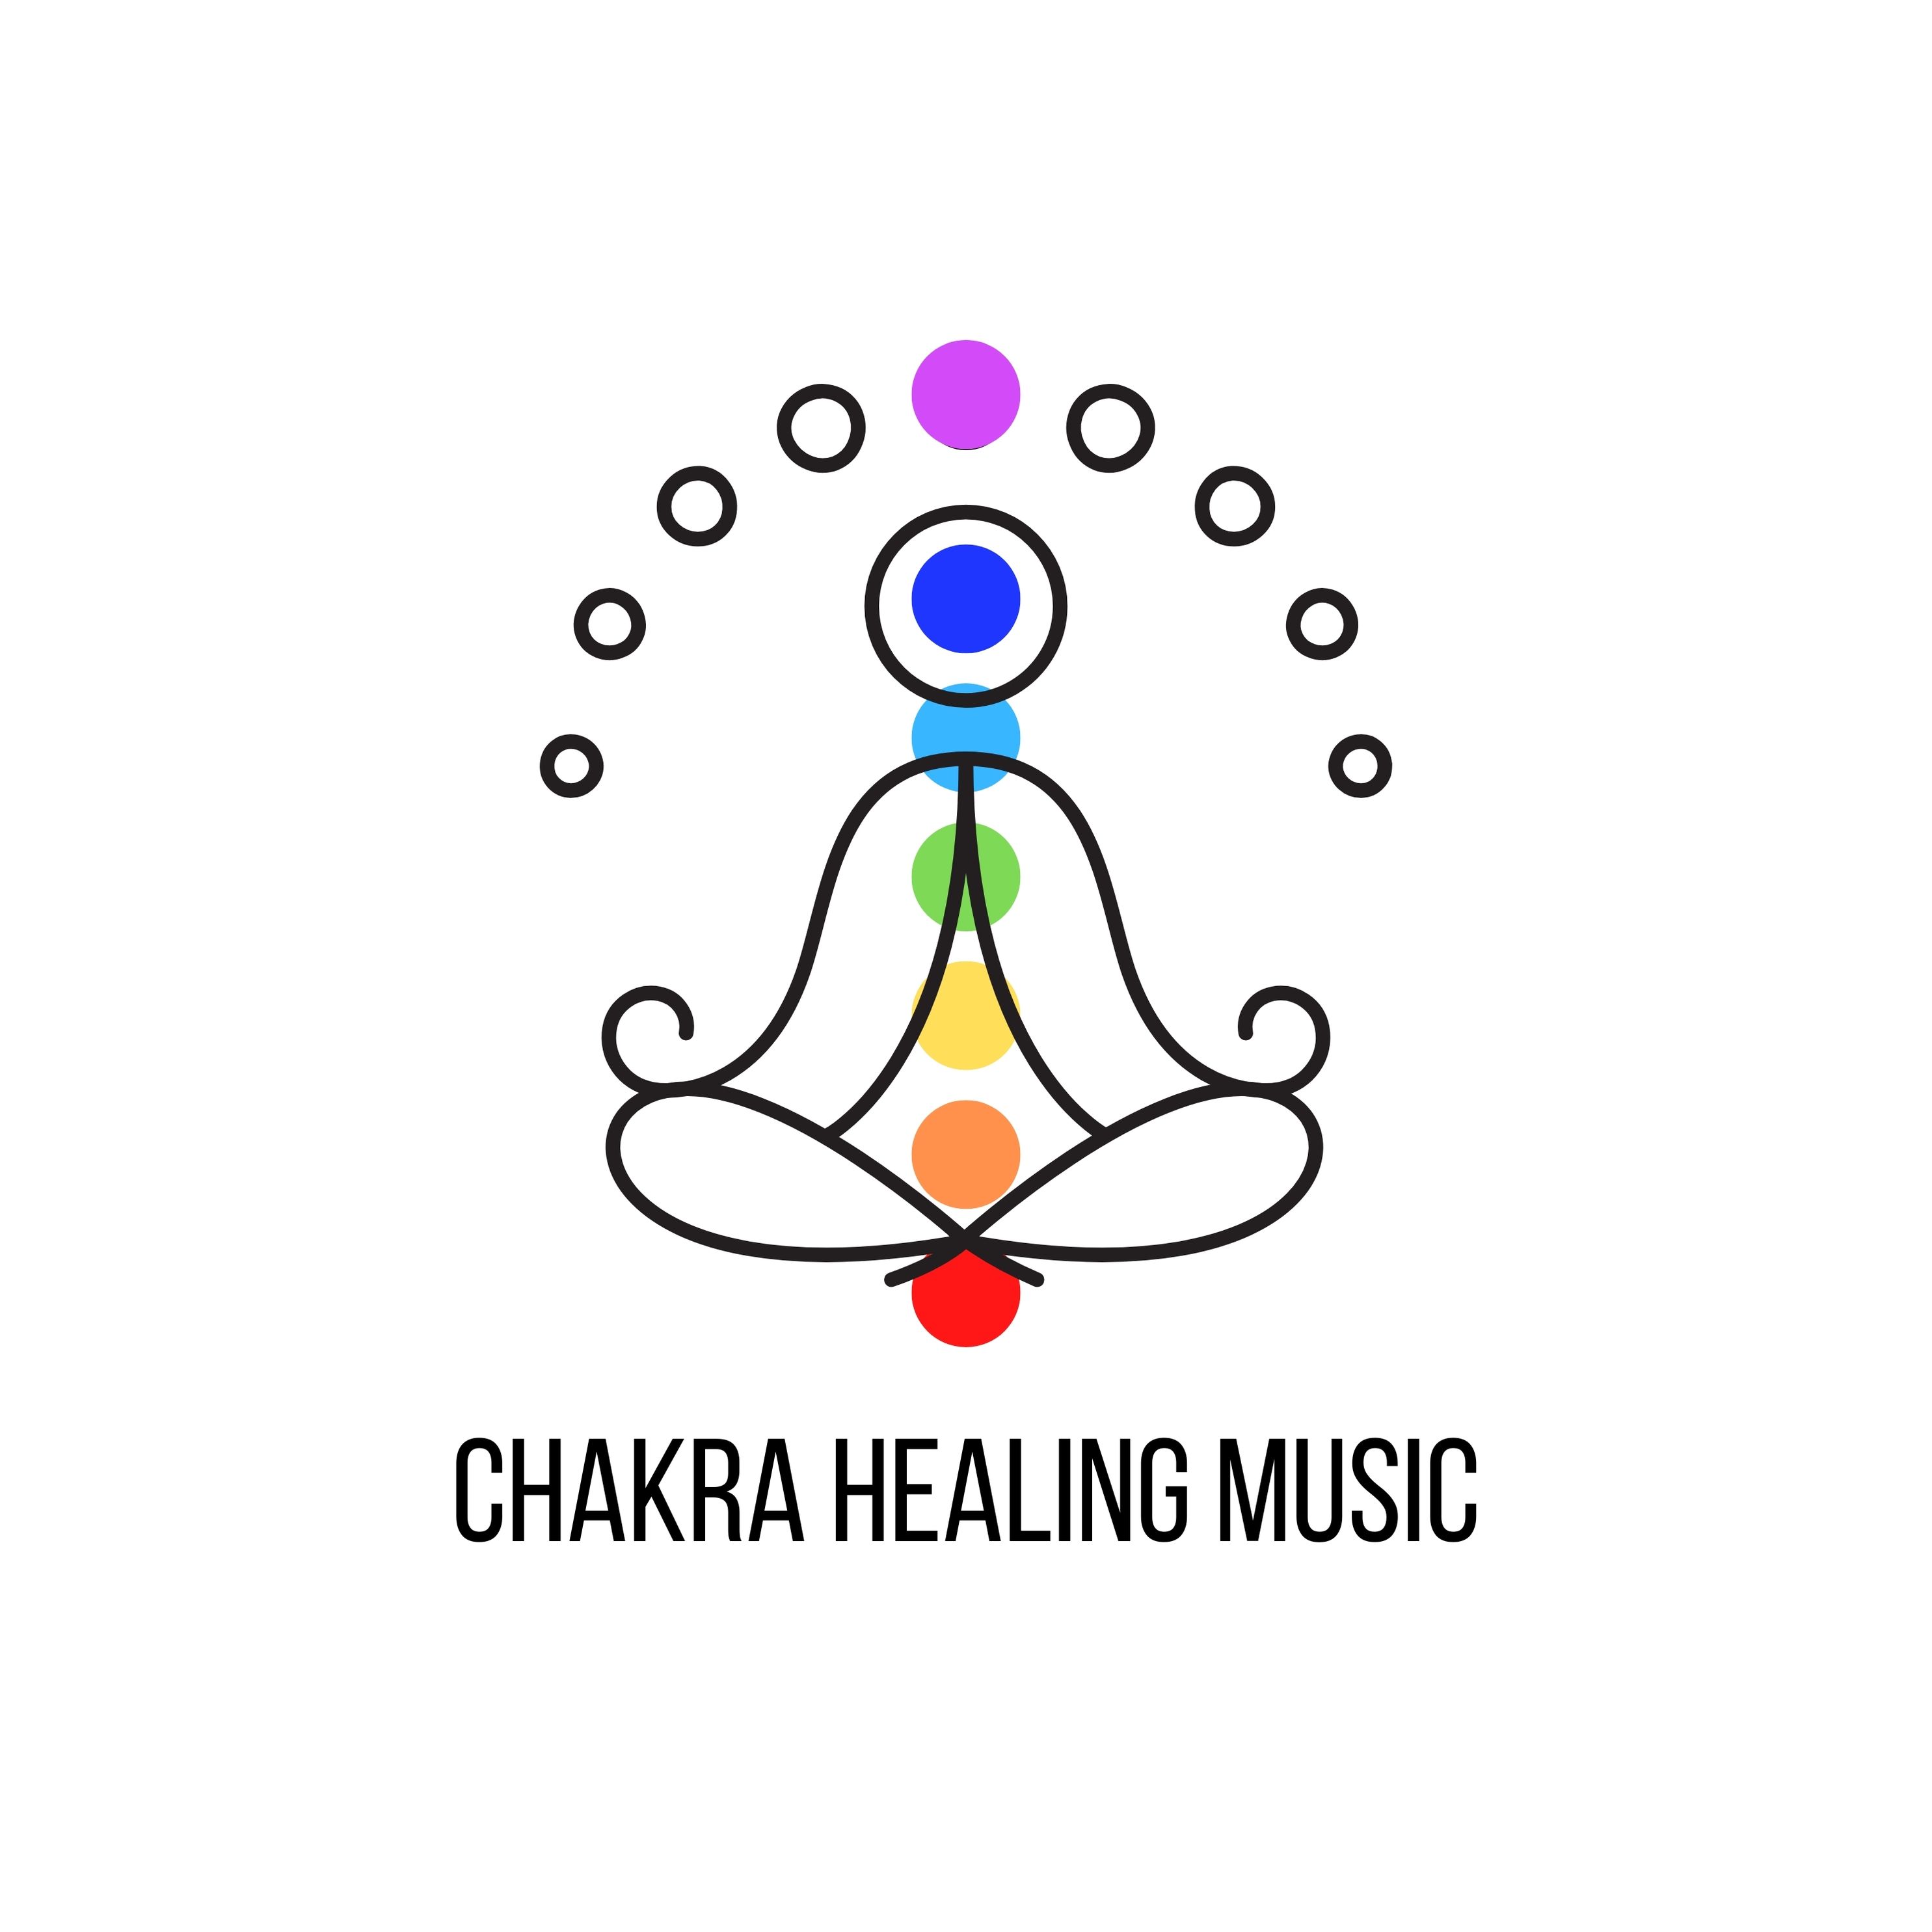 CHAKRA HEALING MUSIC - 1 - Chakra Healing Music Hörbuch Download